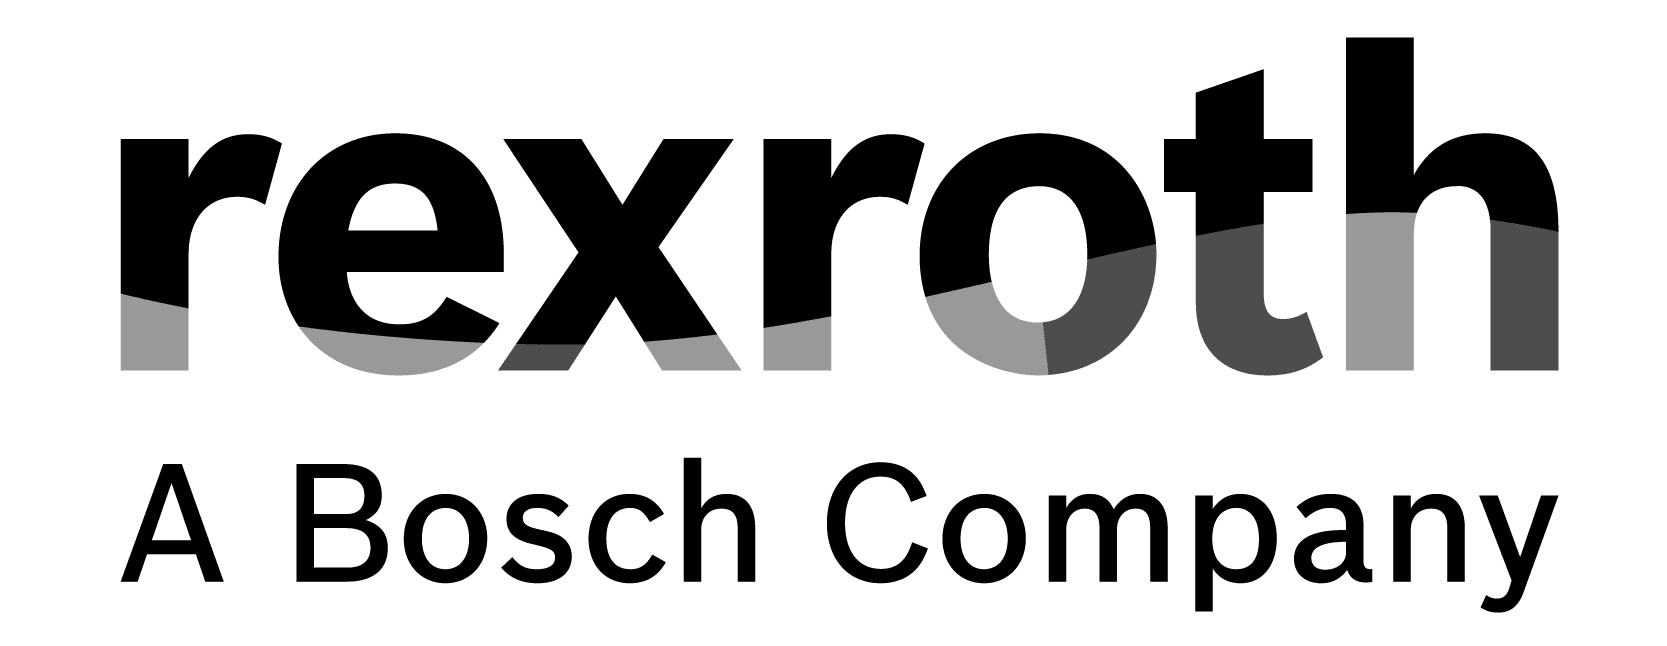 rexroth A Bosch Company black and white logo